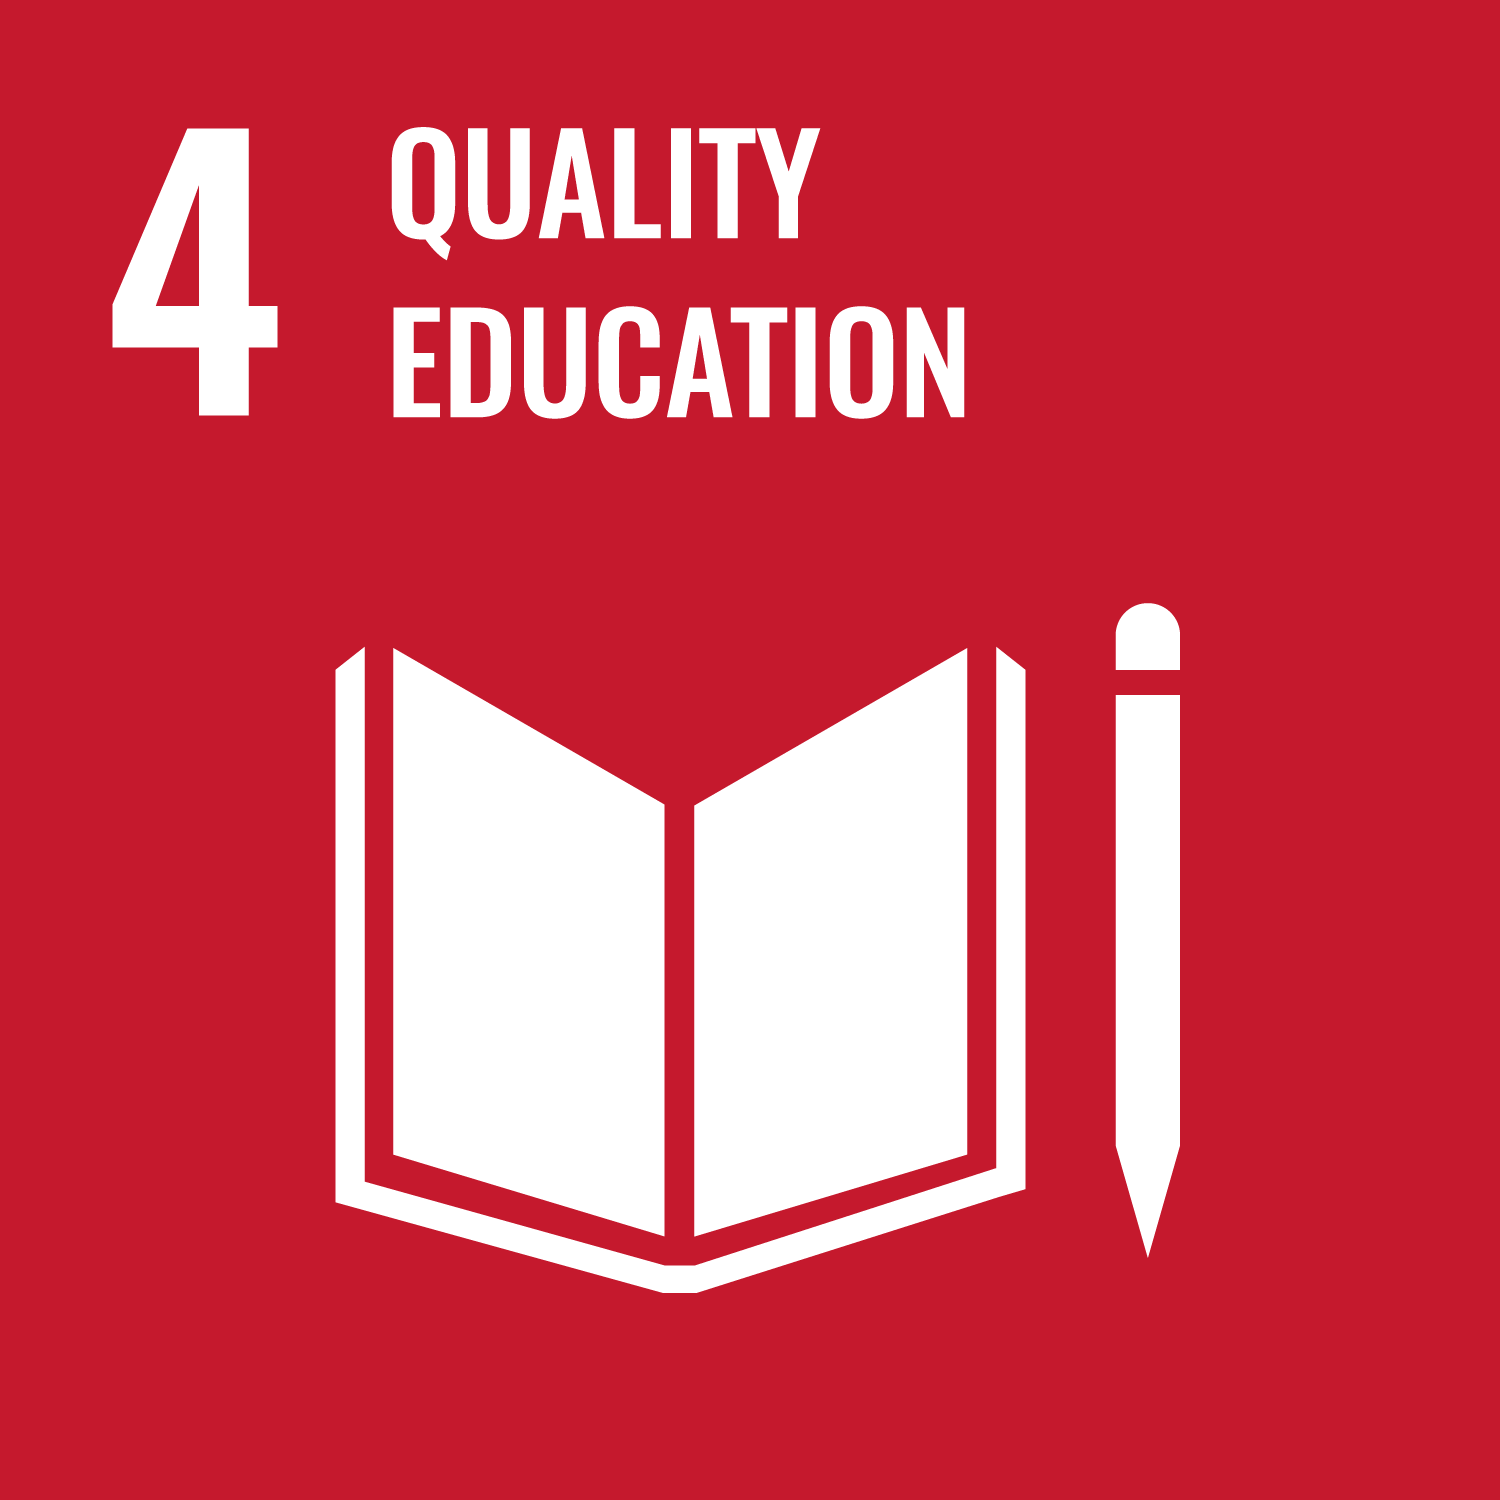 04. Quality education